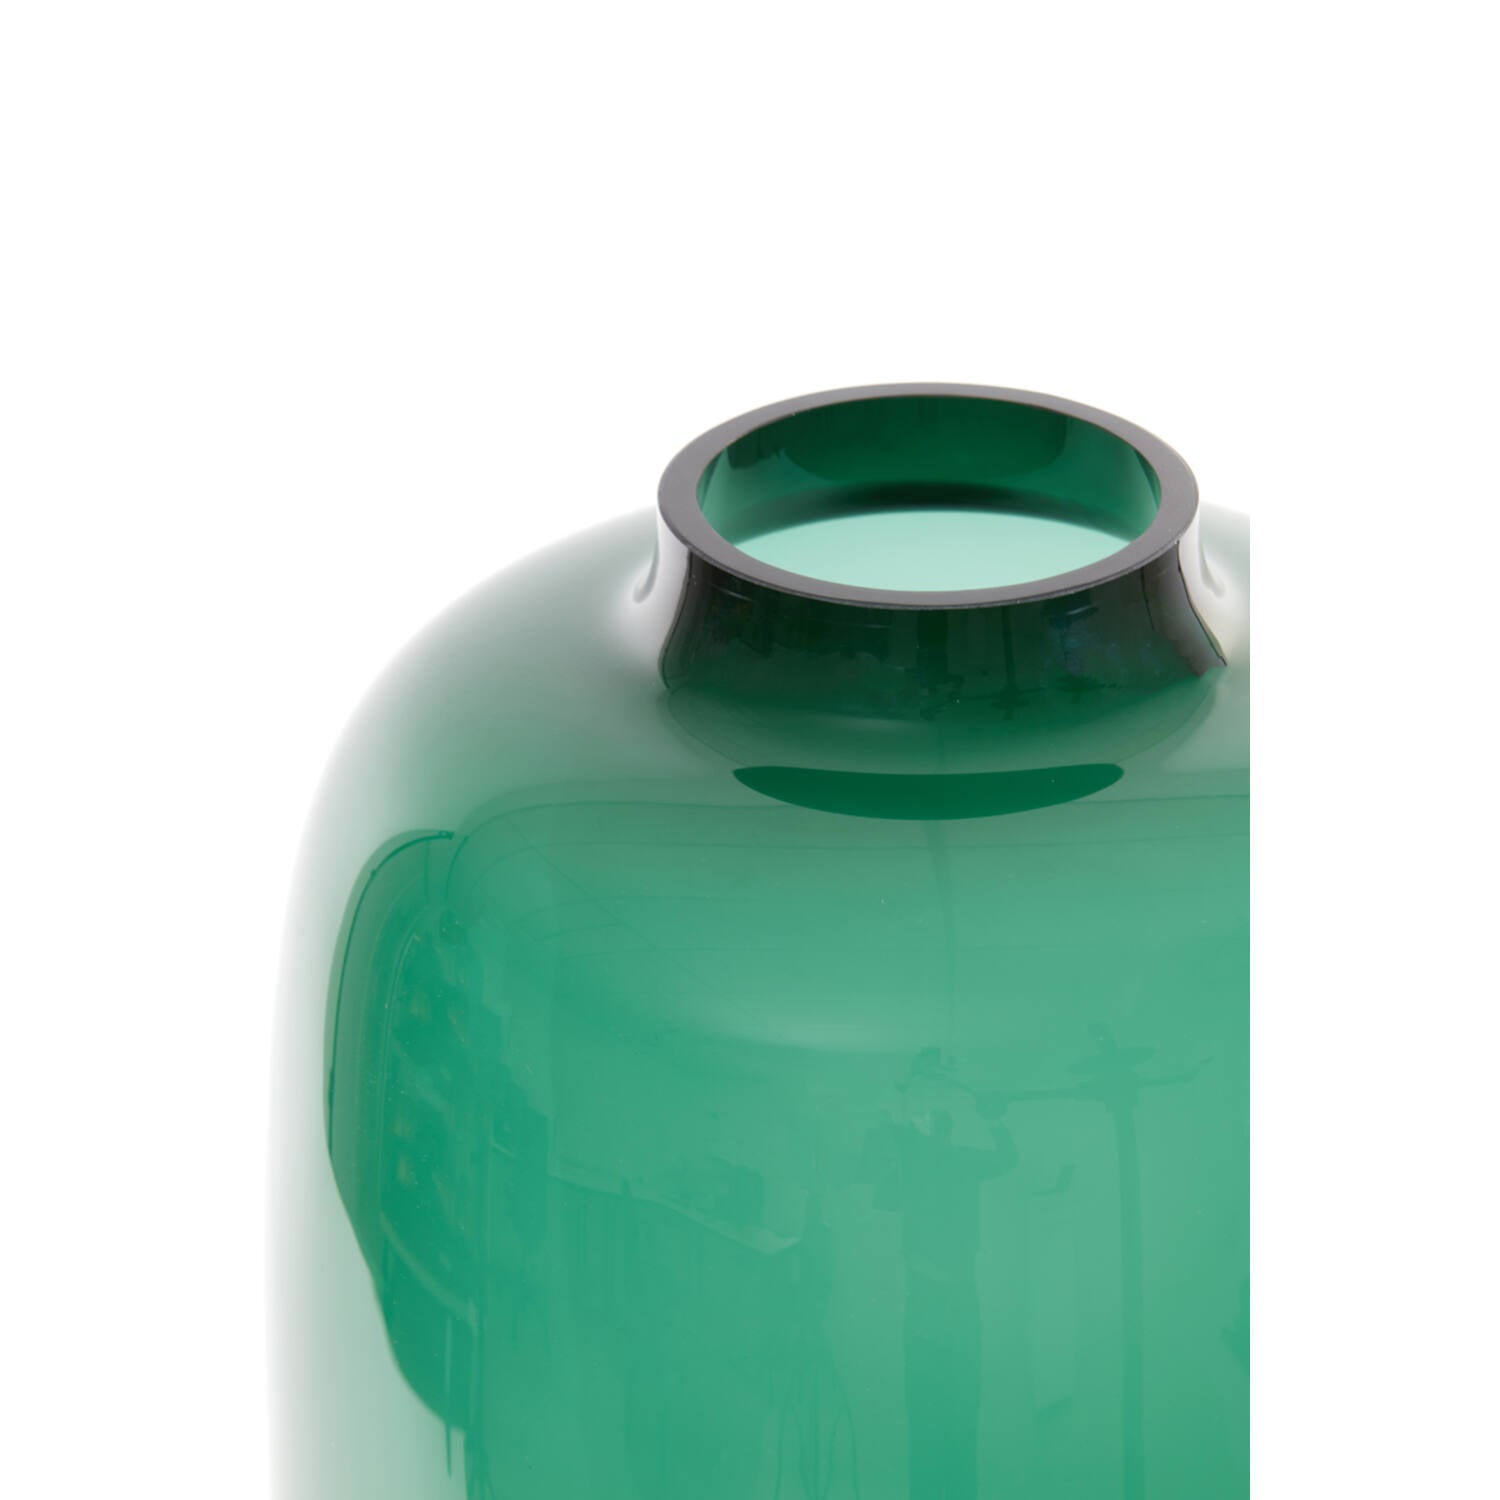 Keira XL Vase - Green Glass Finish